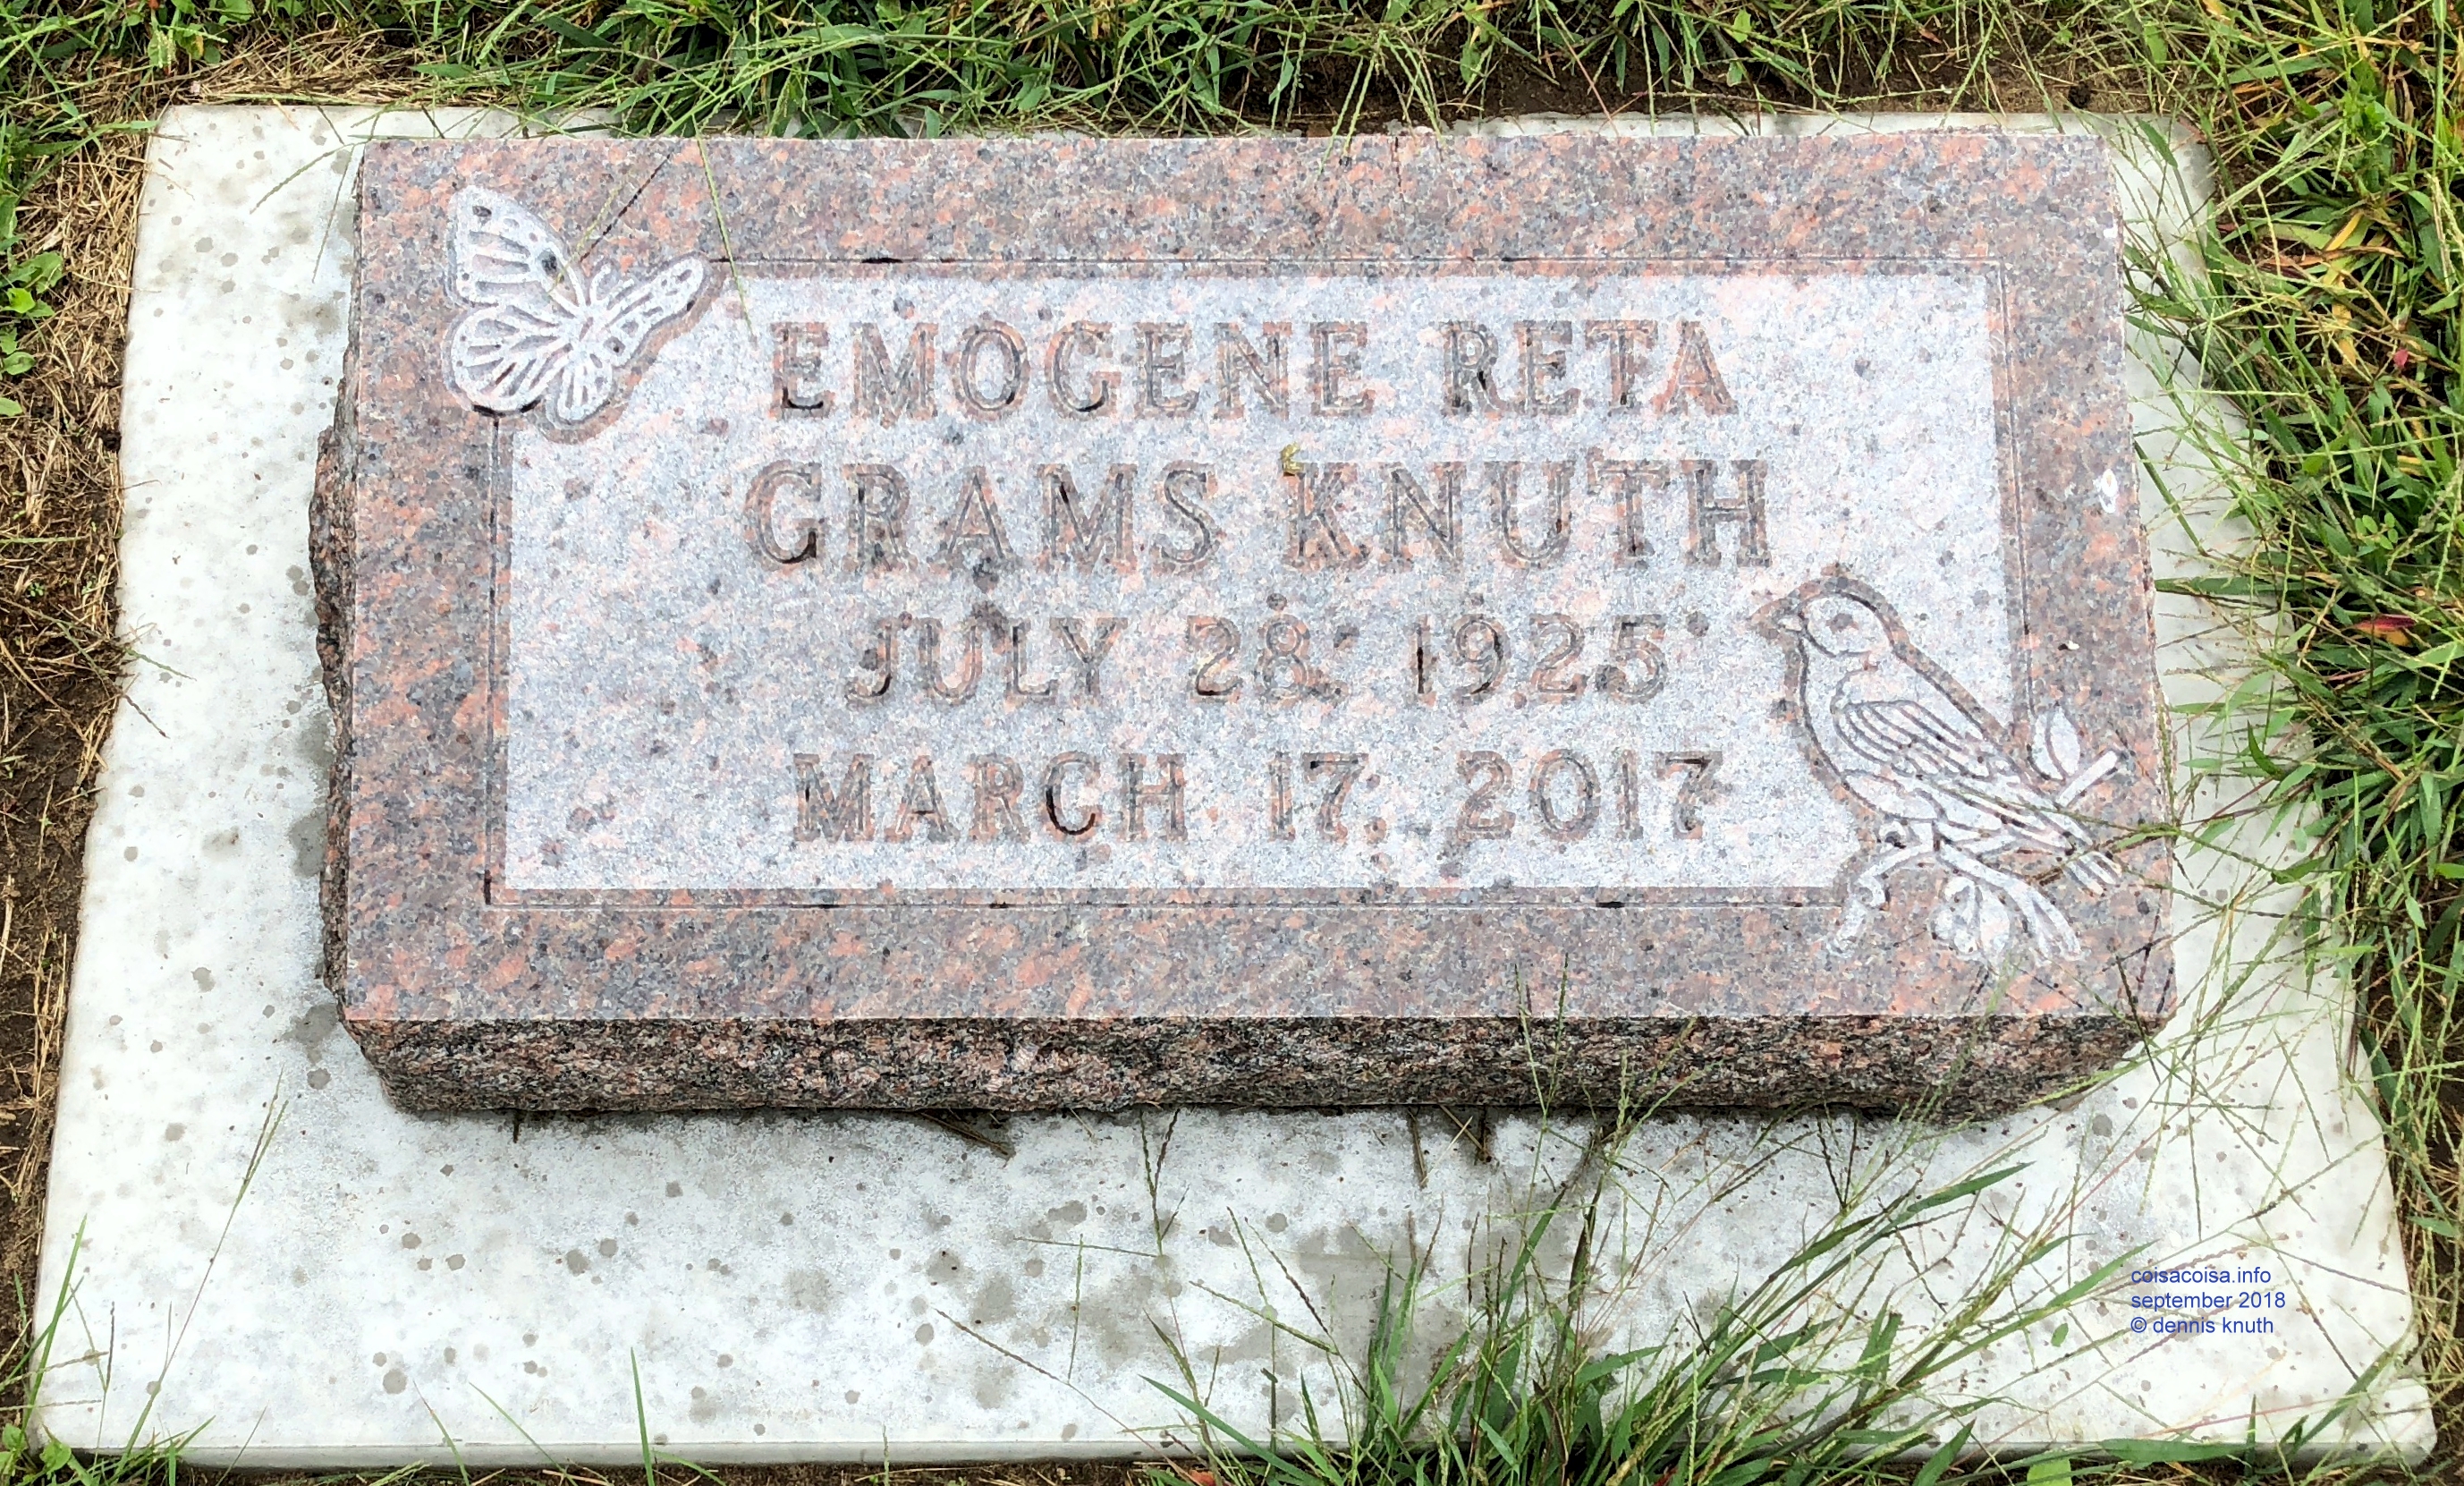 Emogene Reta Grams Knuth headstone